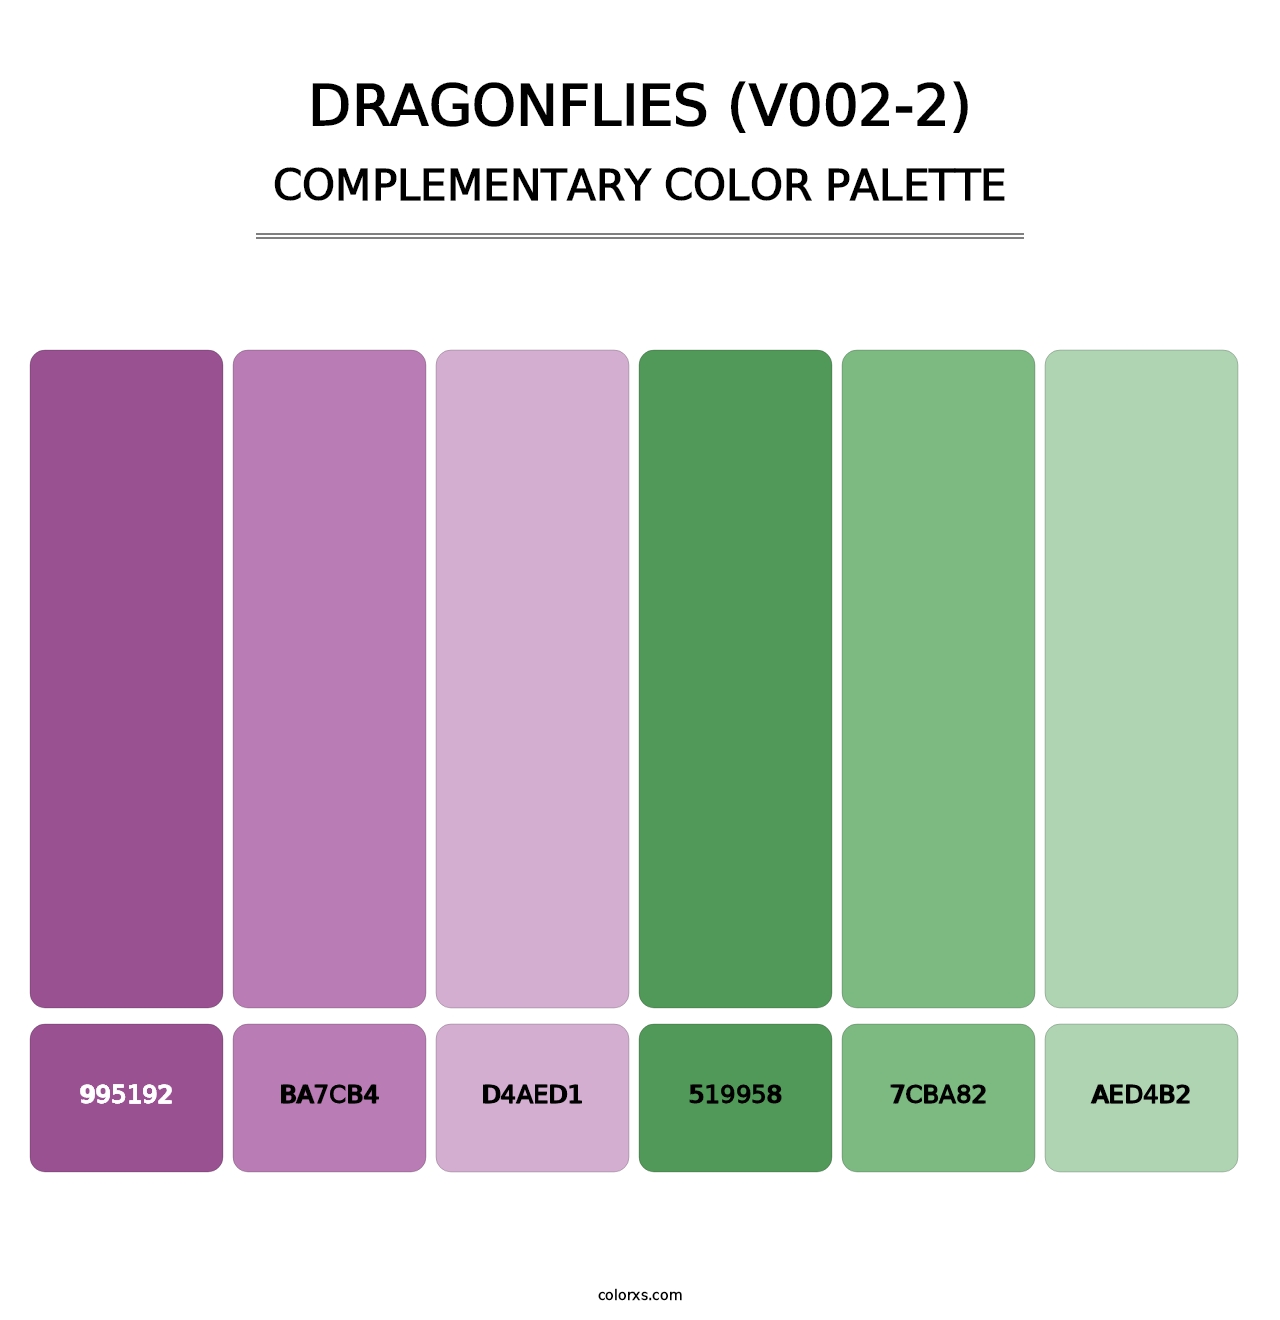 Dragonflies (V002-2) - Complementary Color Palette